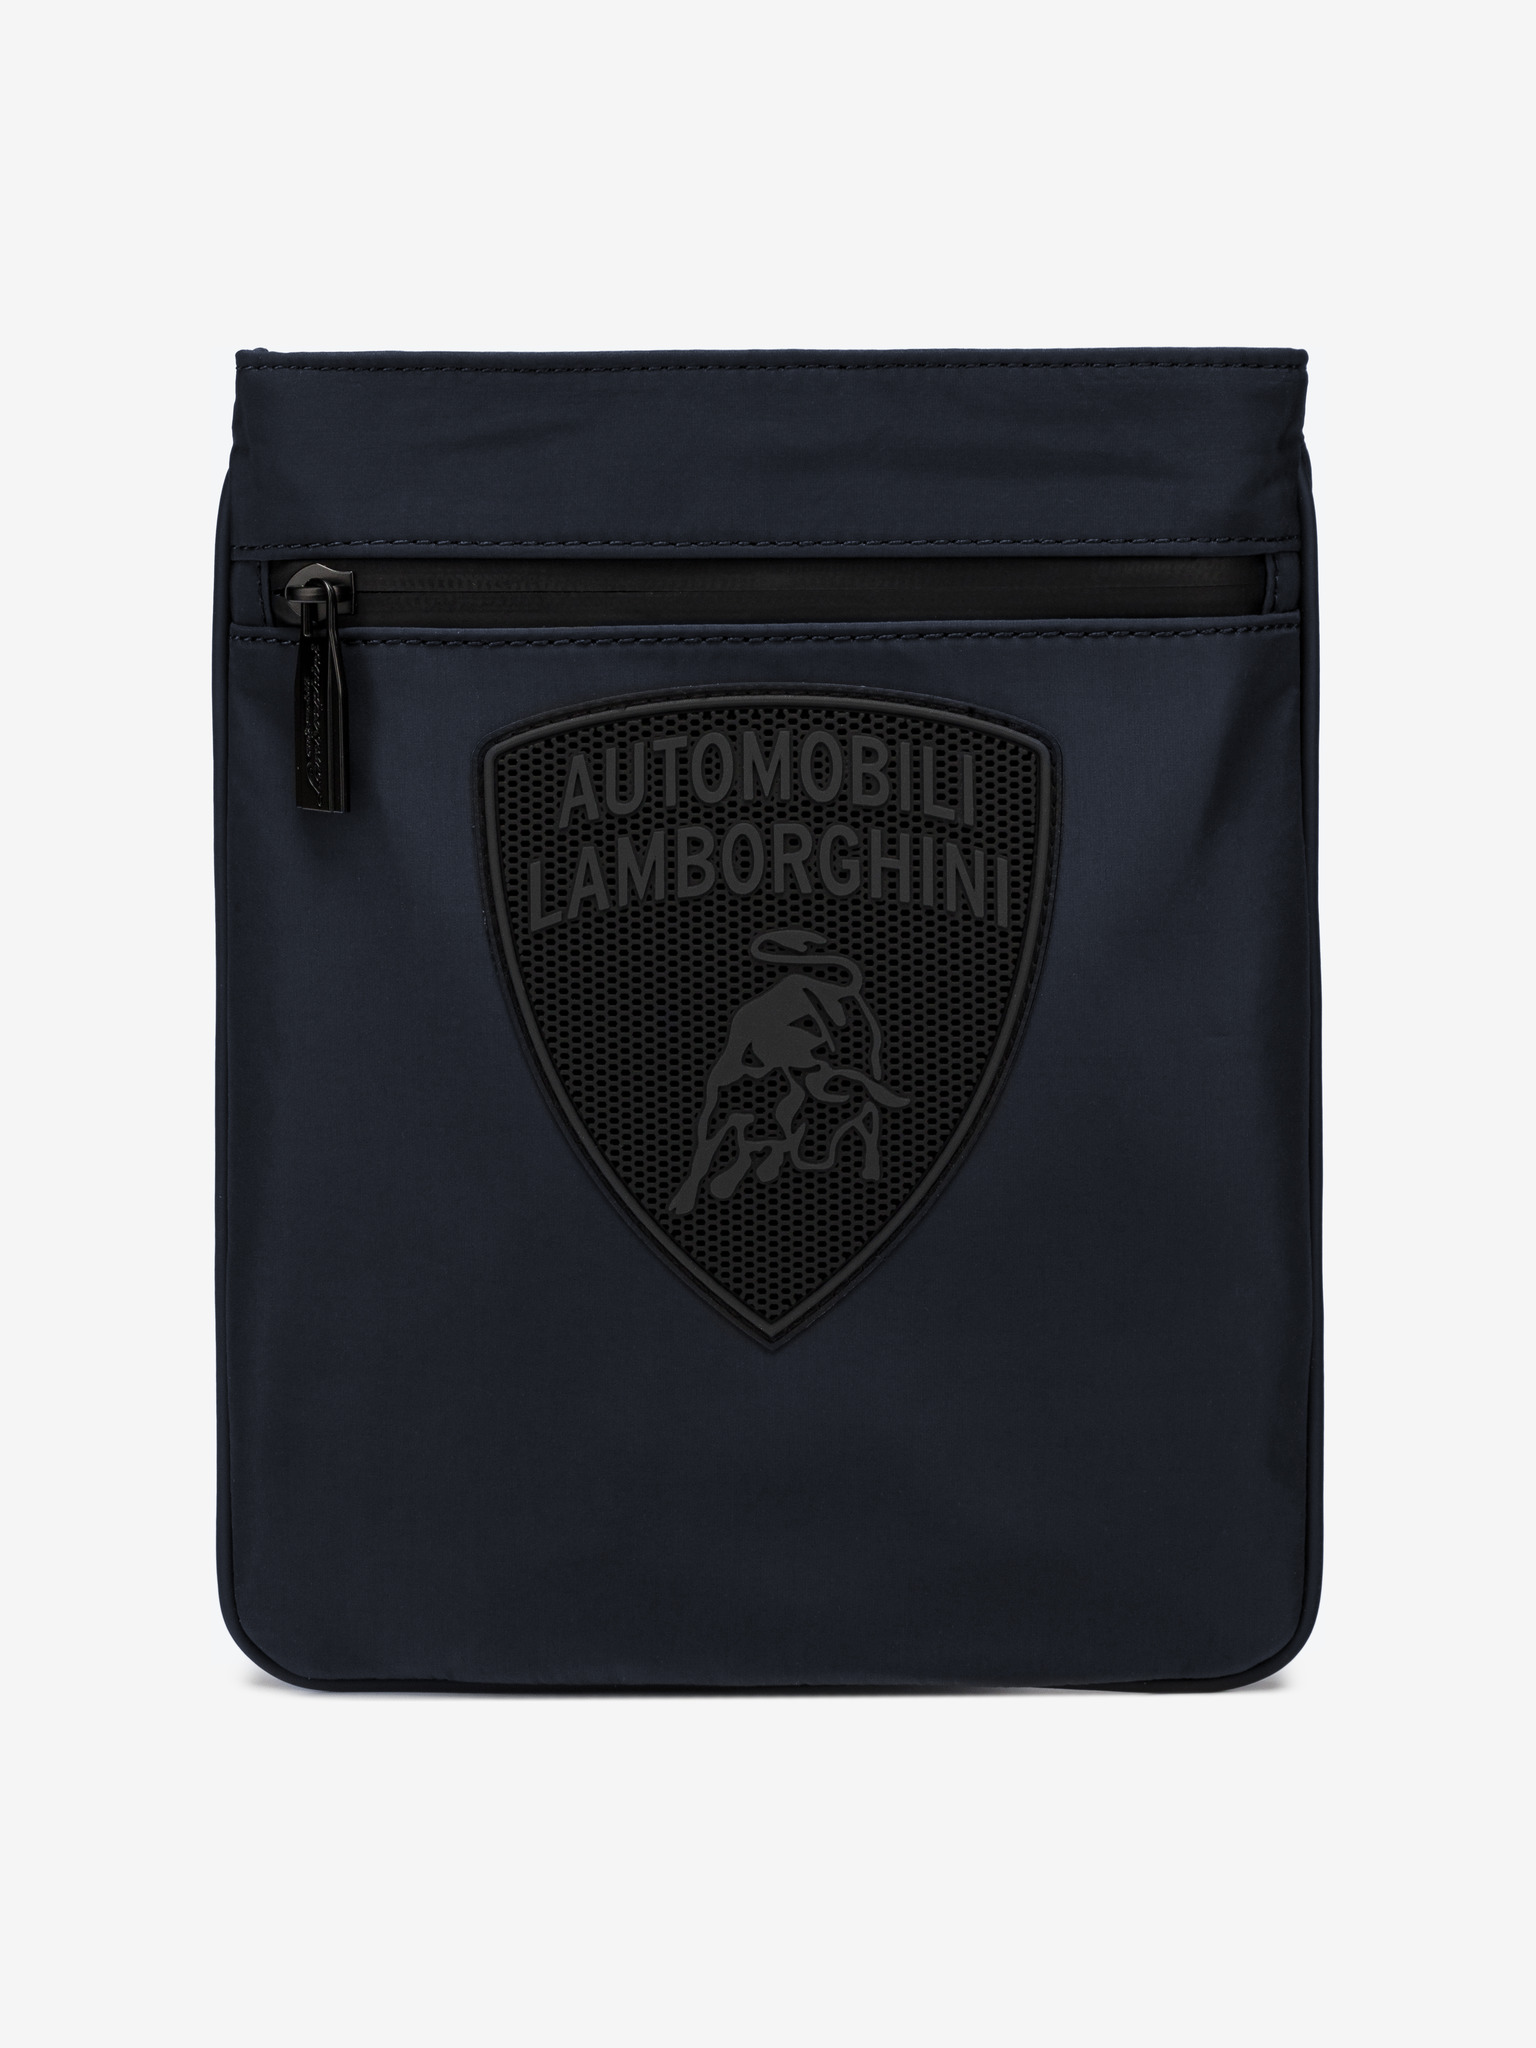 Lamborghini - Cross body bag Bibloo.com